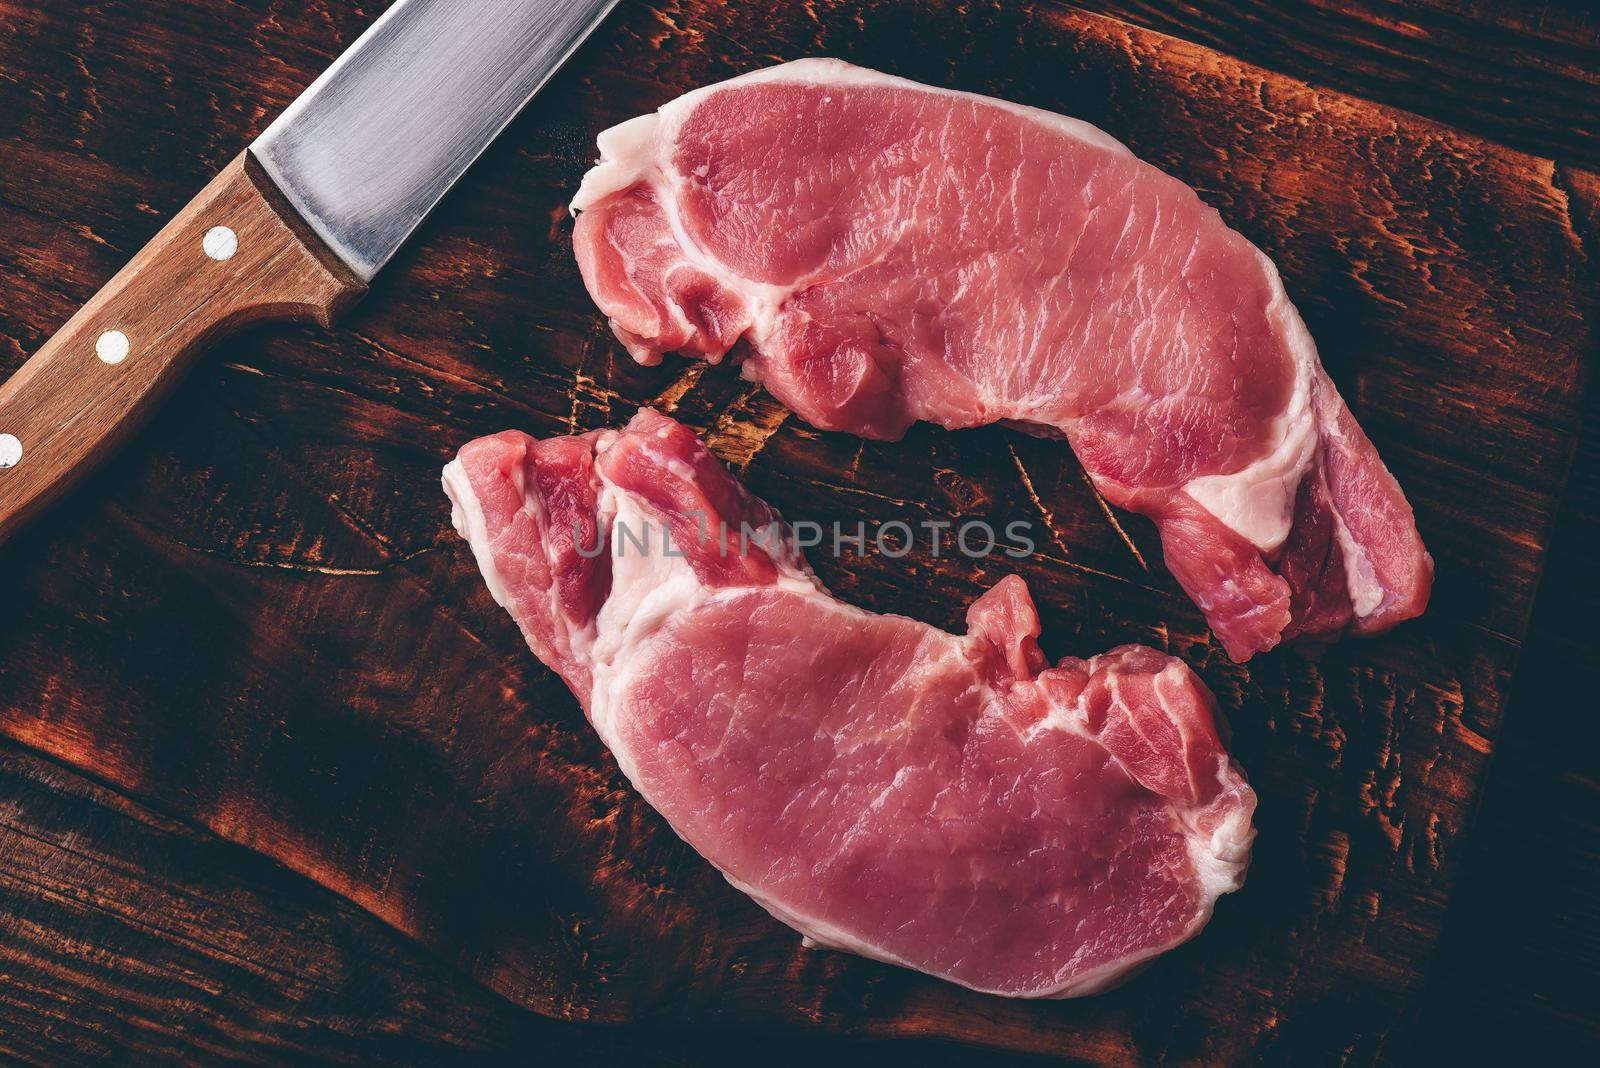 Two pork loin steaks with knife by Seva_blsv